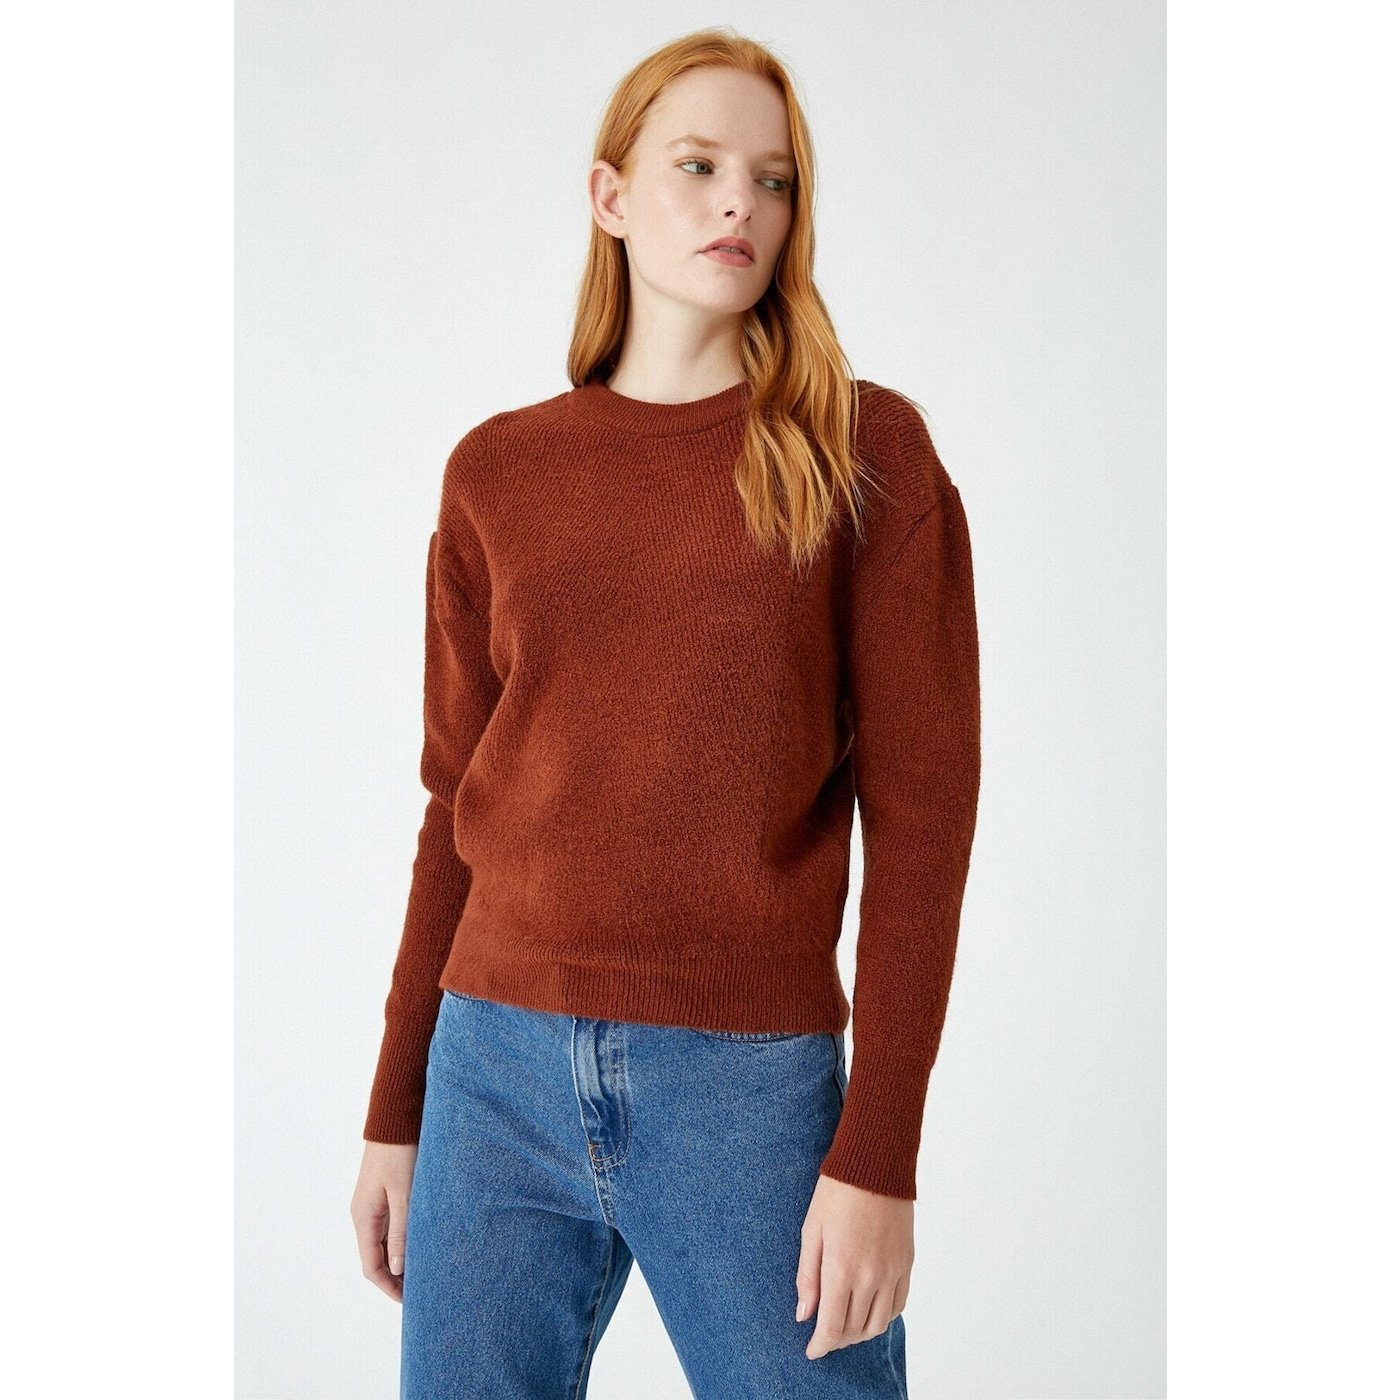 Koton Woman Brown Sweater